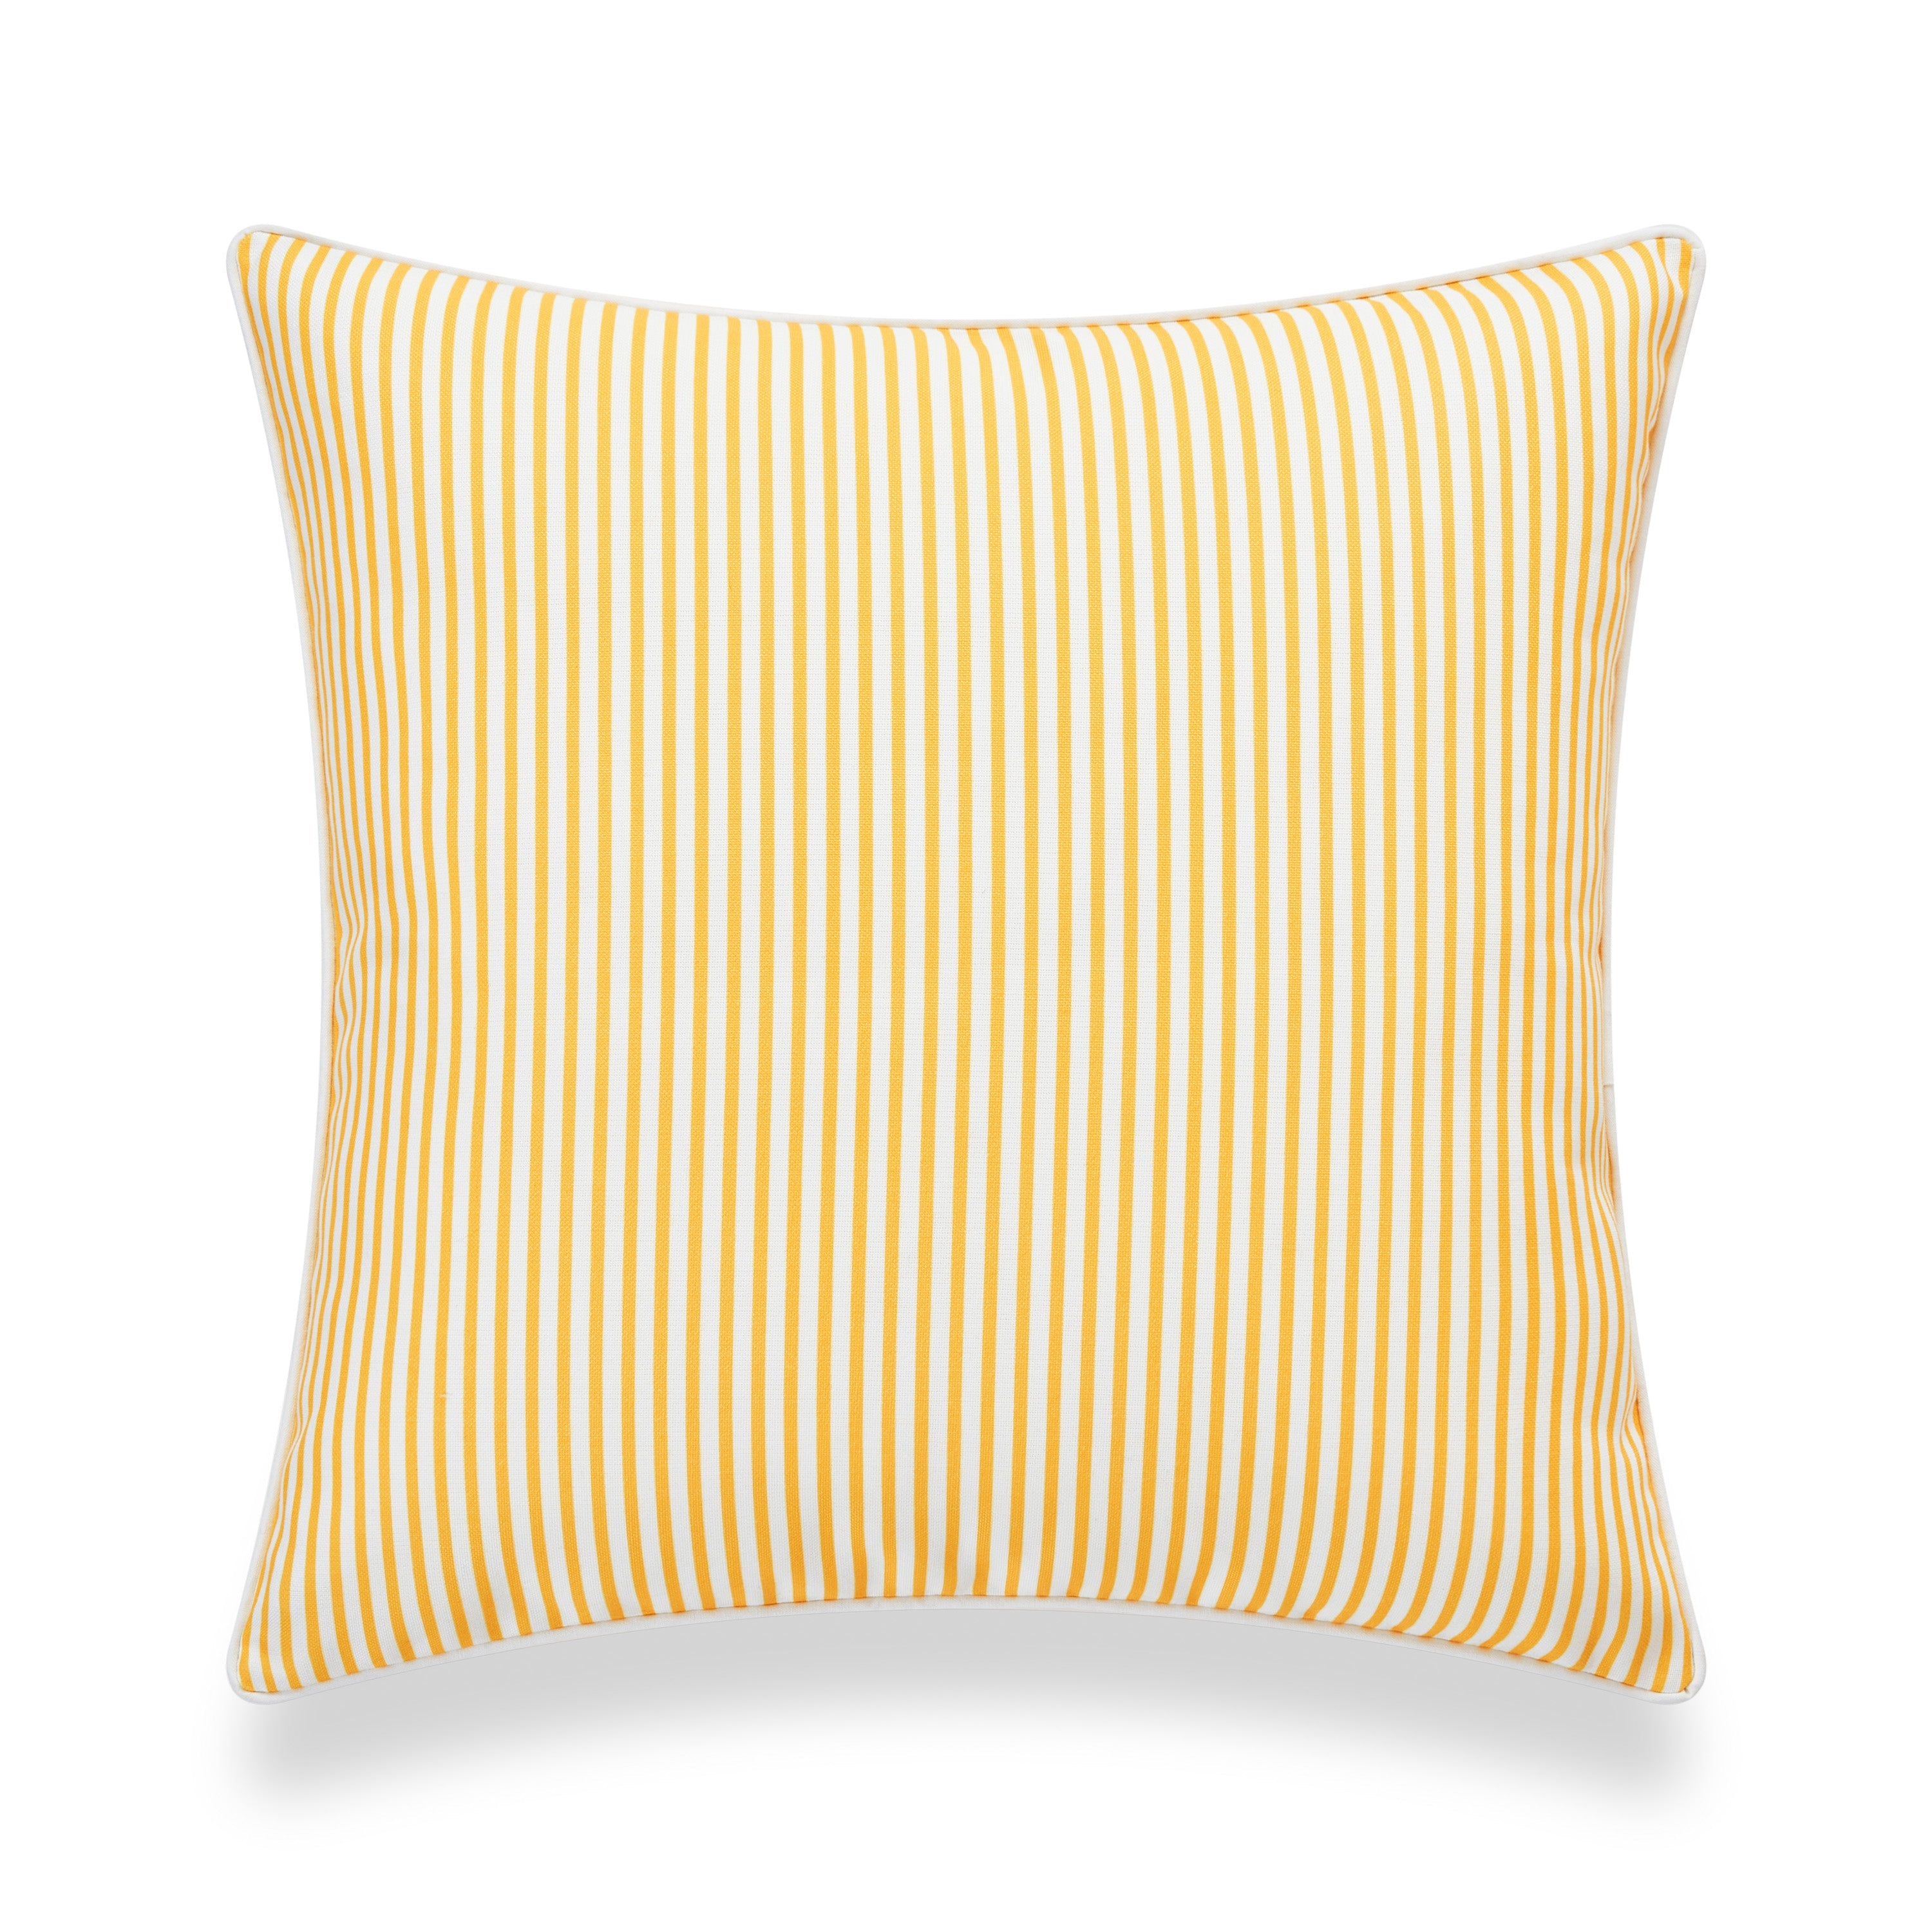 Coastal Indoor Outdoor Pillow Cover, Stripe, Yellow, 20"x20"